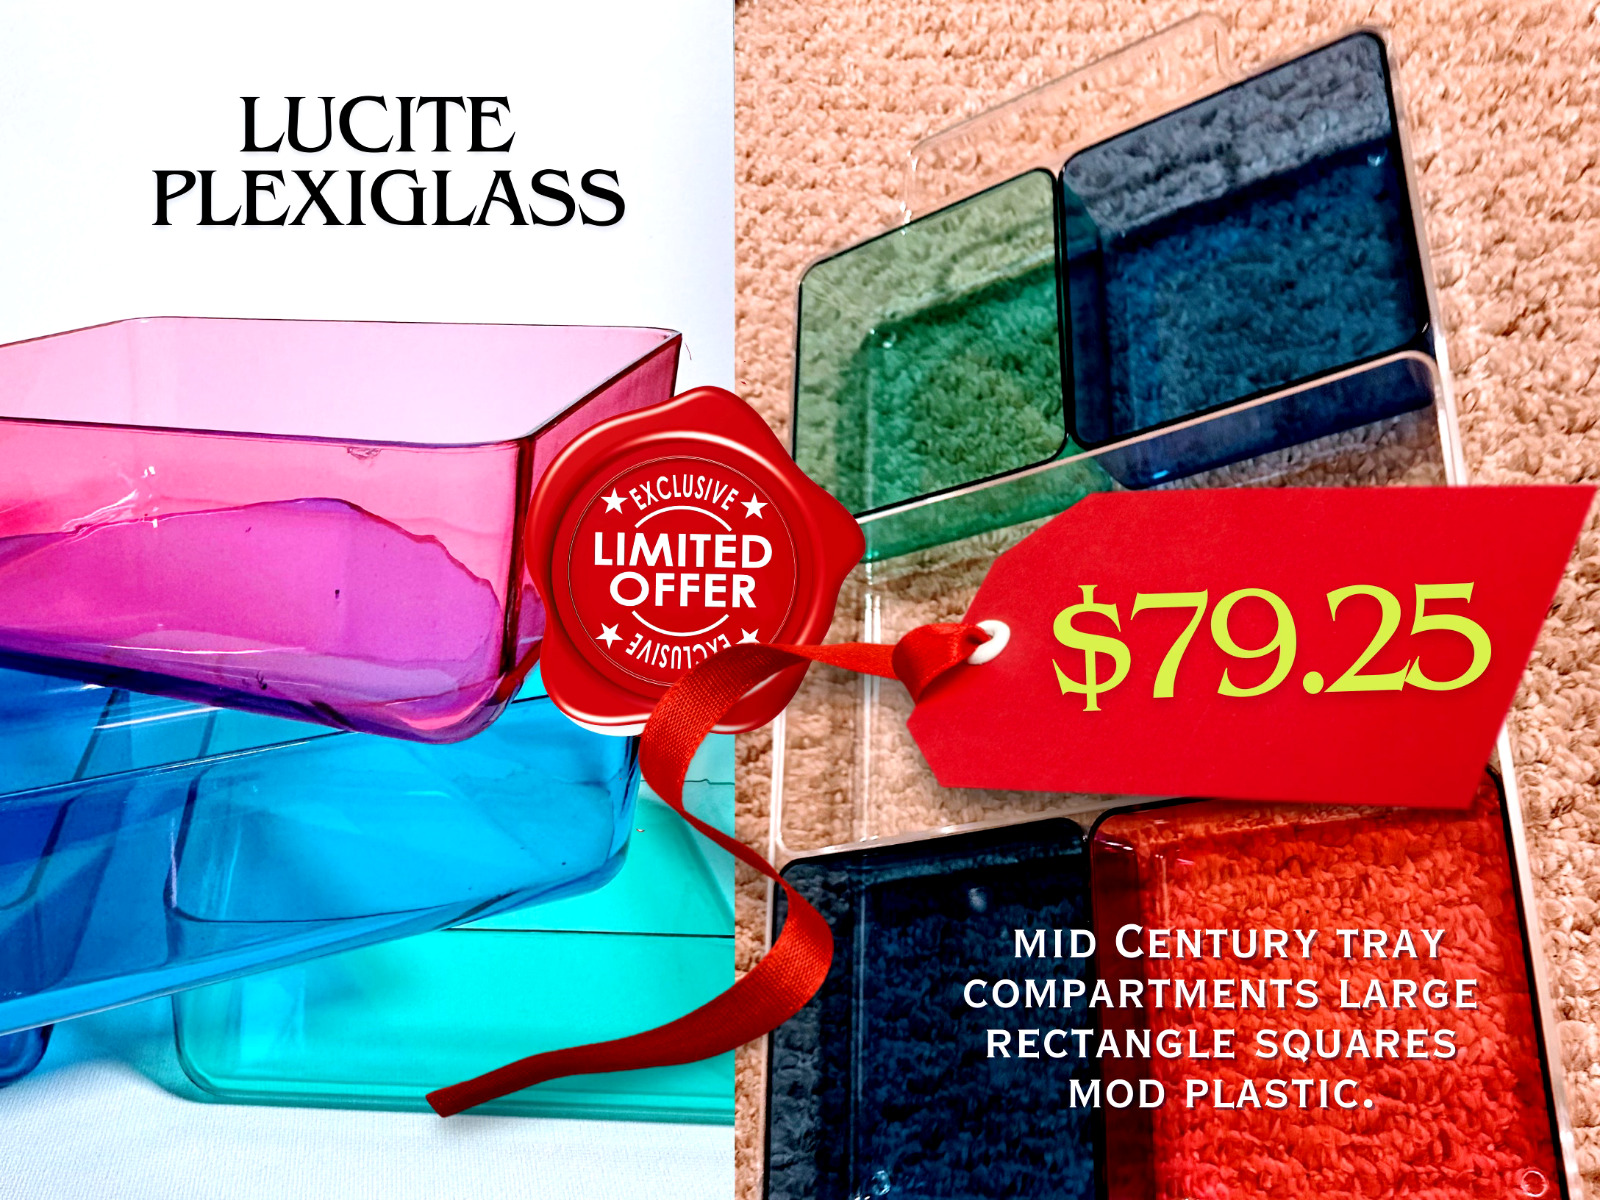 Lucite plexiglass mid Century tray compartments large rectangle  mod plastic.